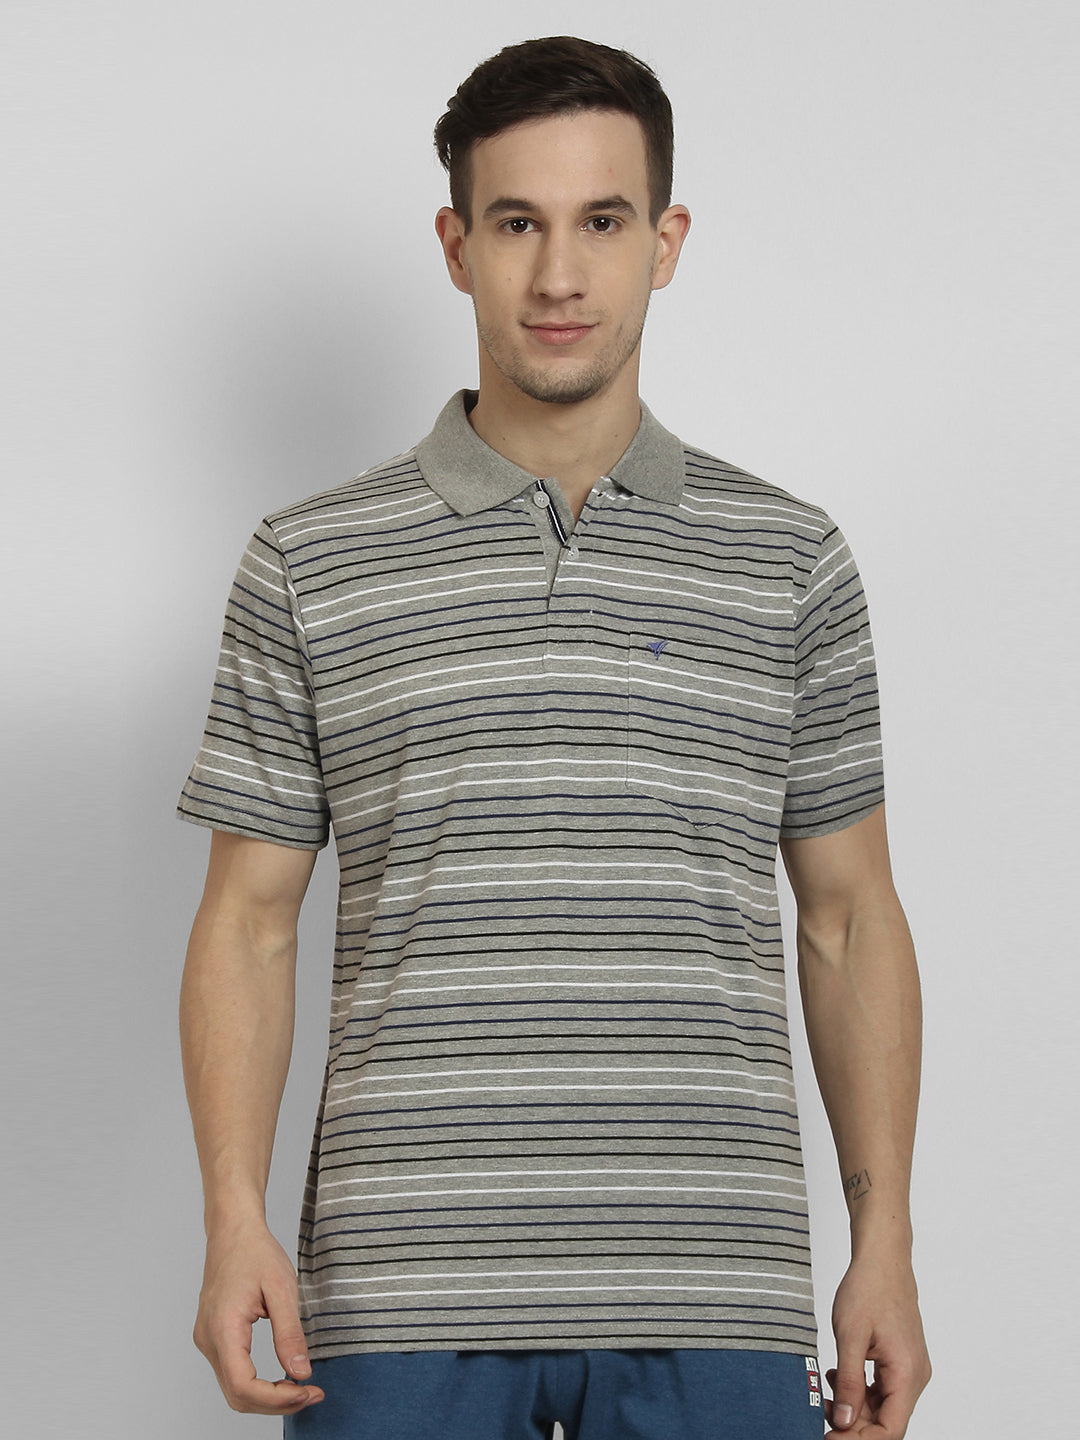 Neva Polo Neck Men's T-Shirt in Stripes Pattern Half Sleeve-15%Milange Grey